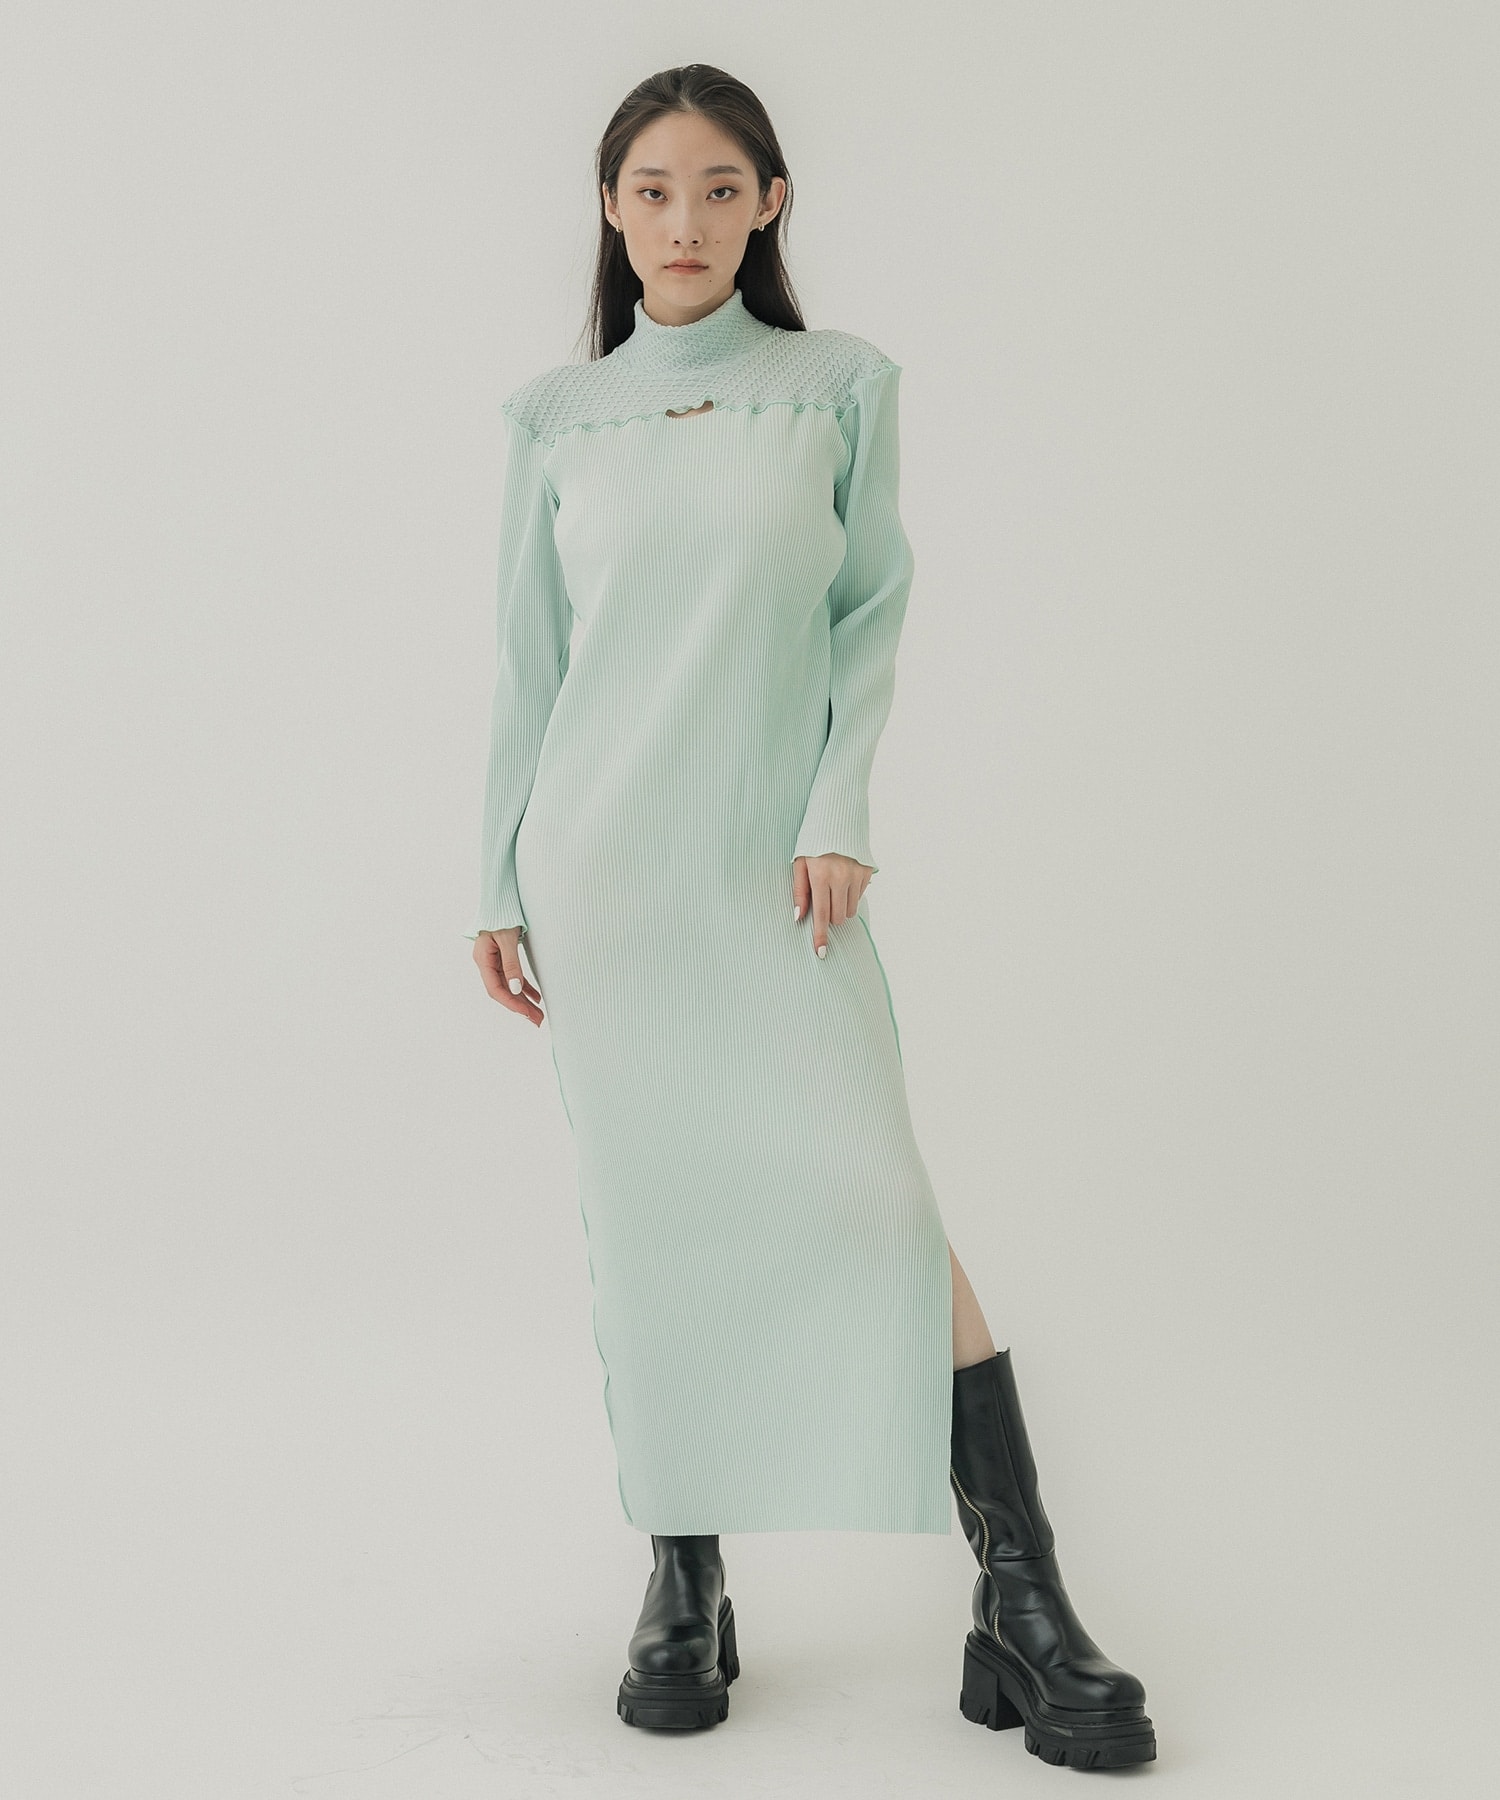 EX.Shrink Dress kotohayokozawa